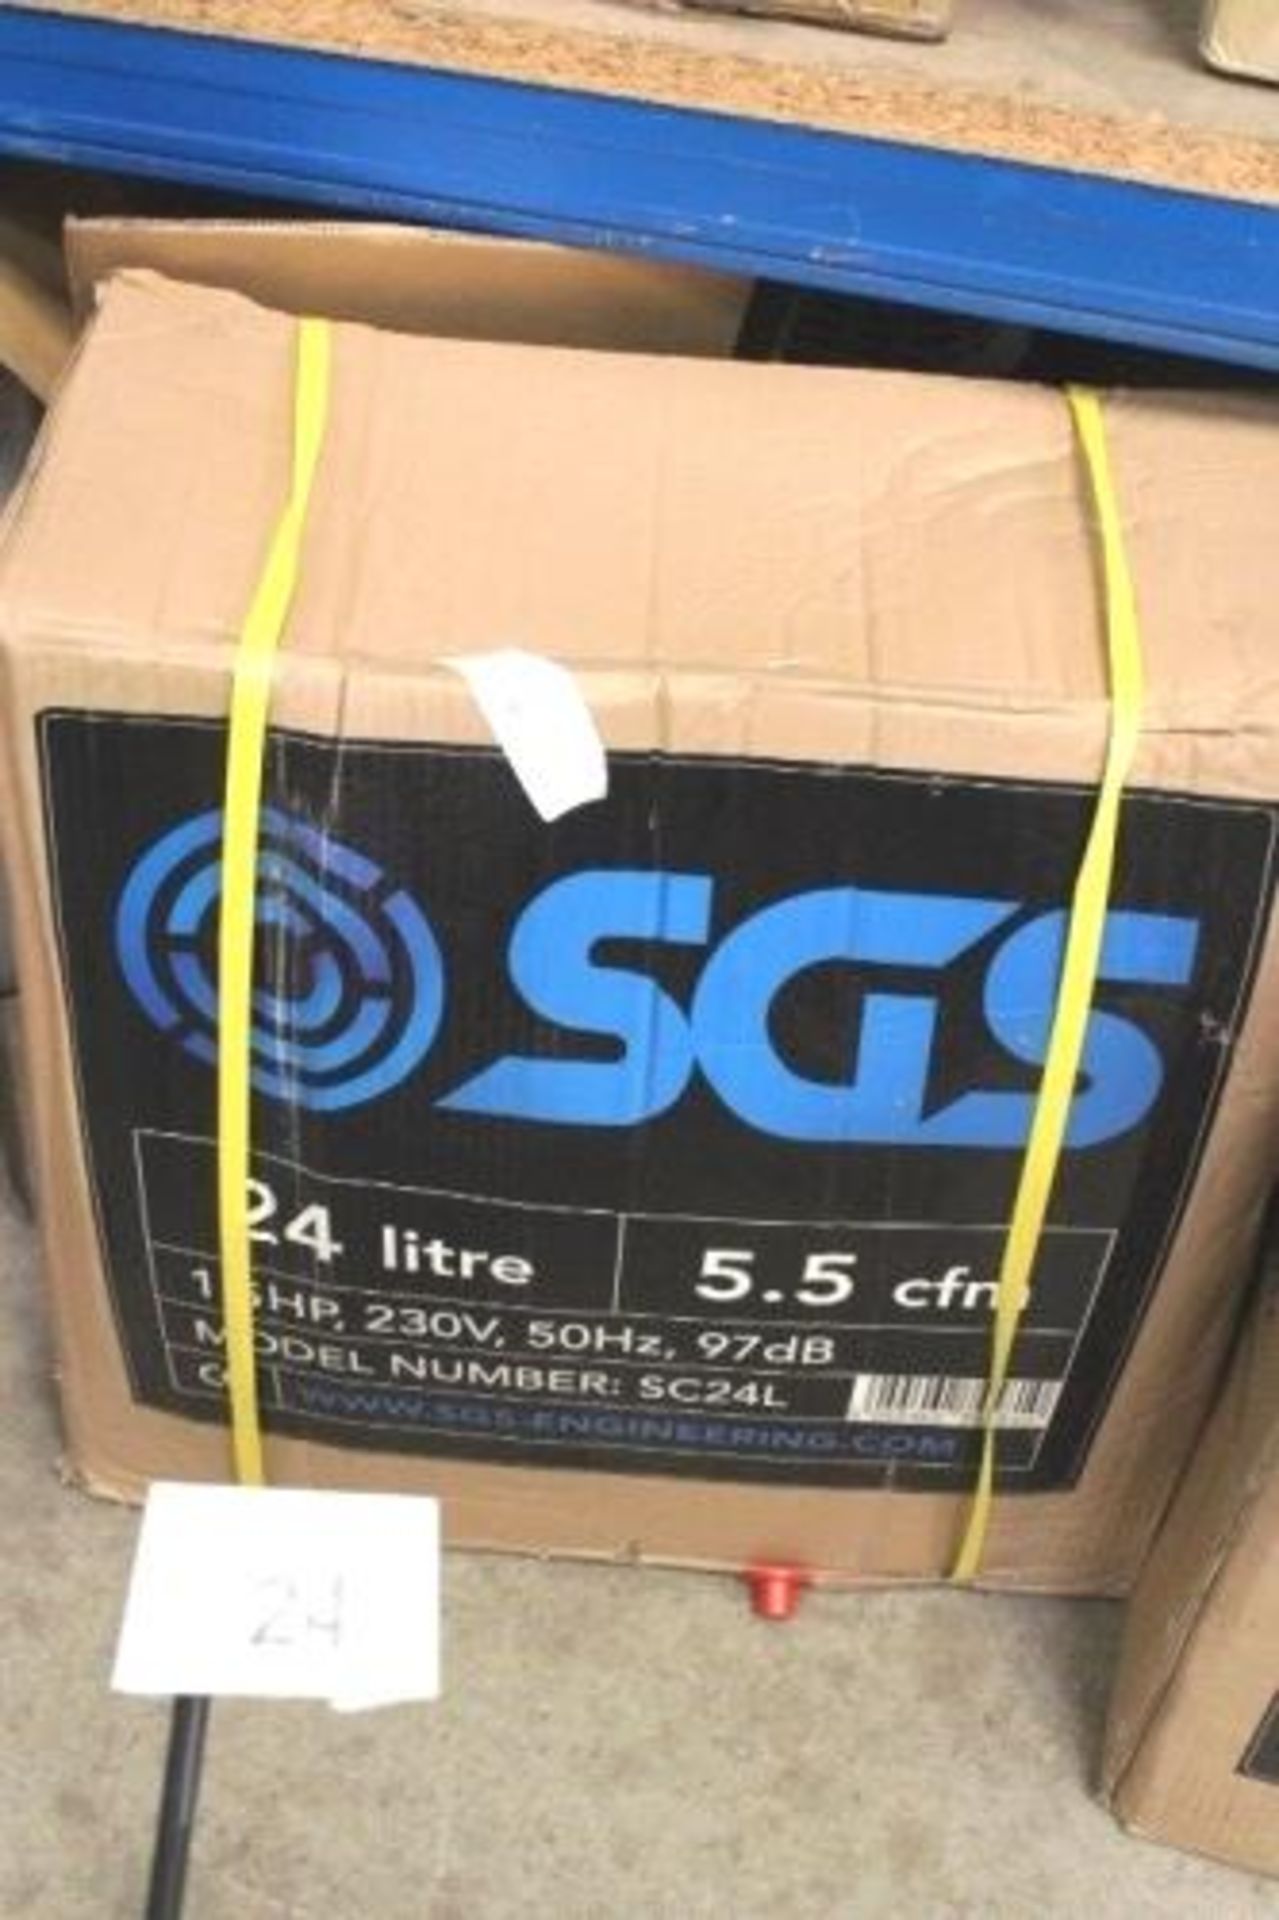 1 x SGS 24L 9.5cfm 1.5hp 230V portable air compressor, model SC24L - New in box (GS26)